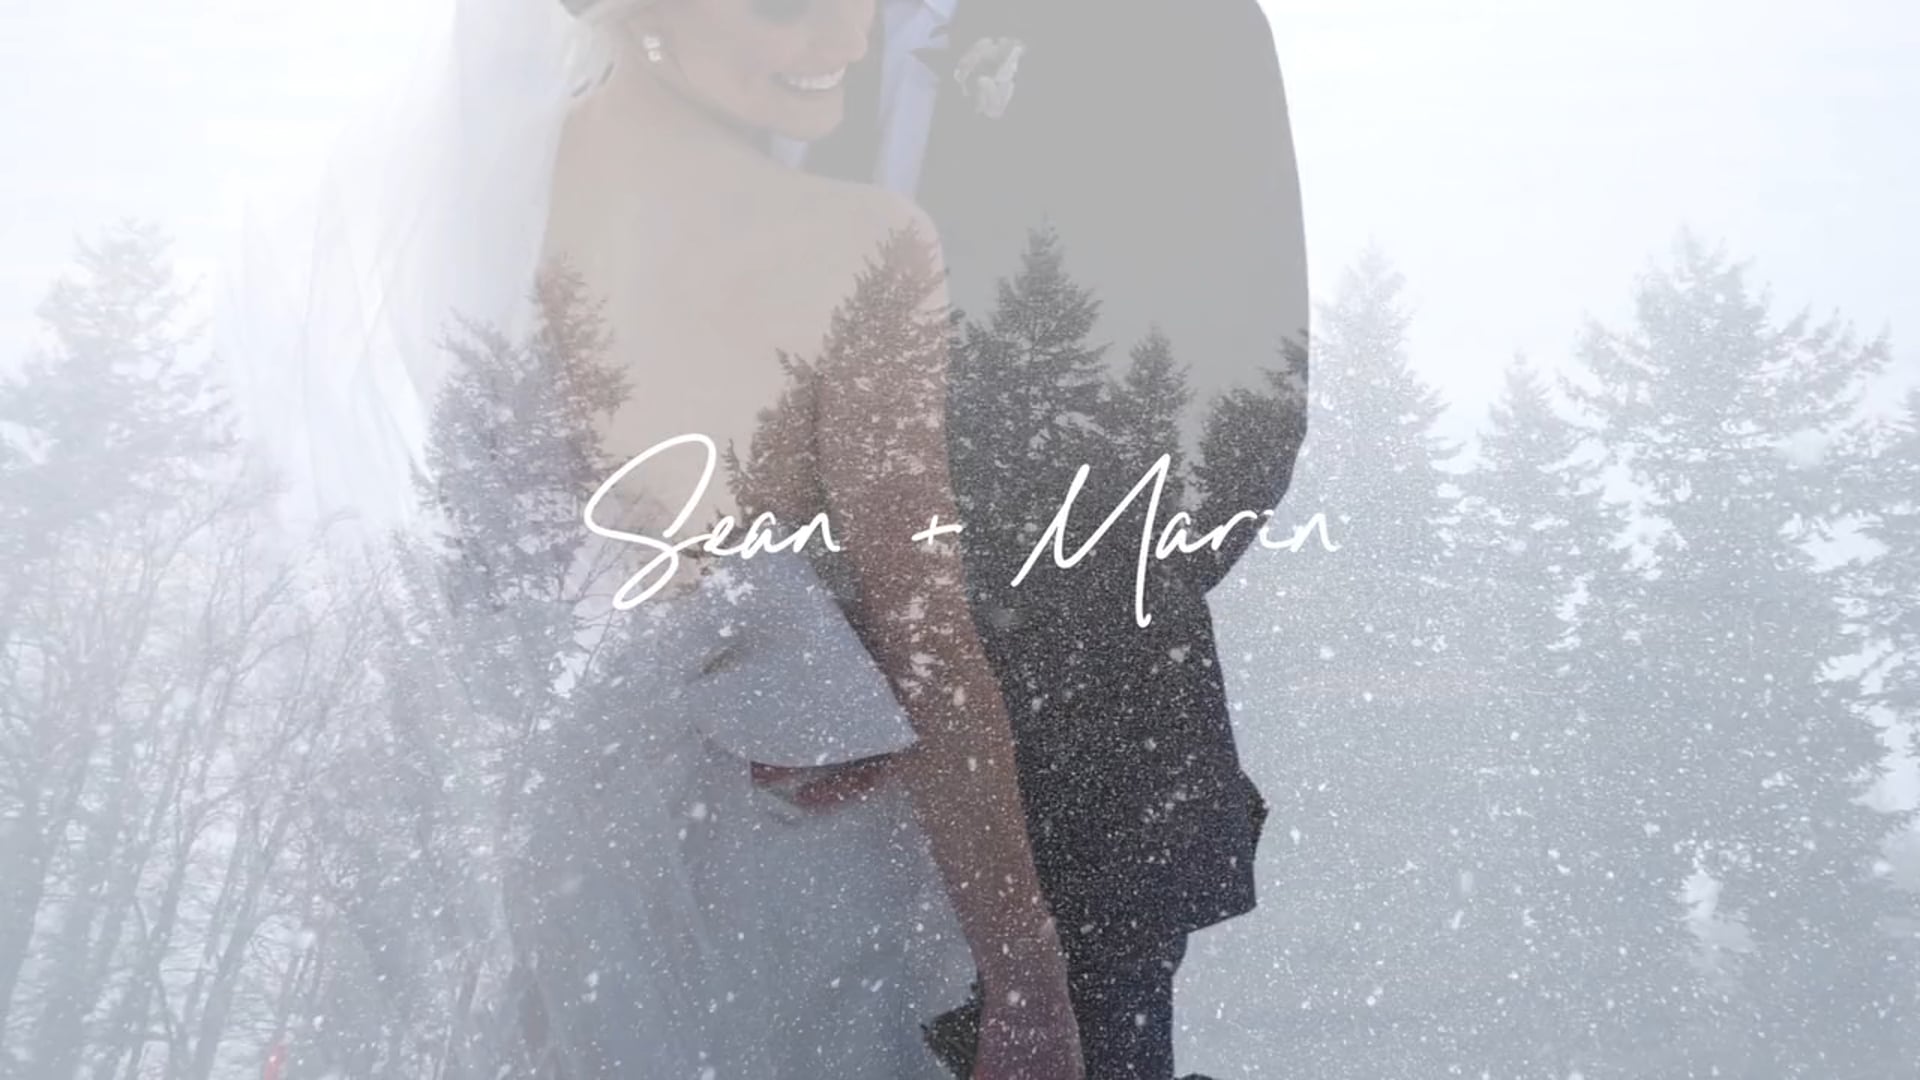 Sean + Marin | Classic and Timeless Winter Machine Shop Wedding | Minneapolis, MN